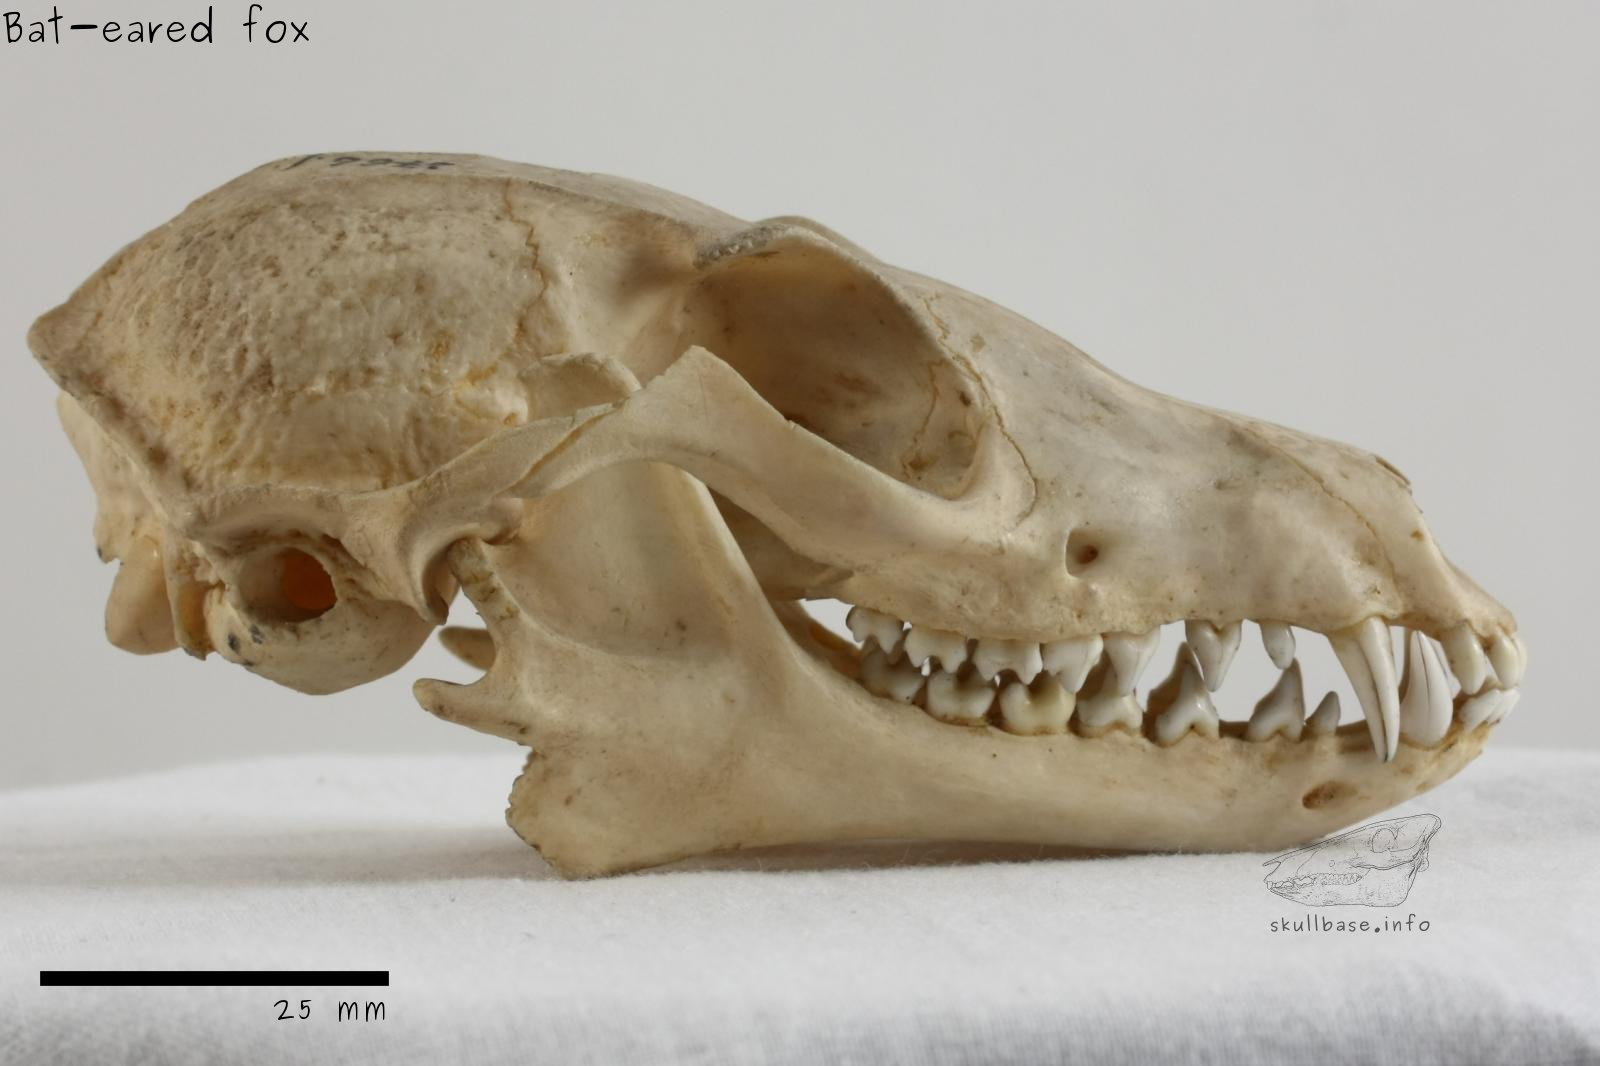 Bat-eared fox (Otocyon megalotis) skull lateral view